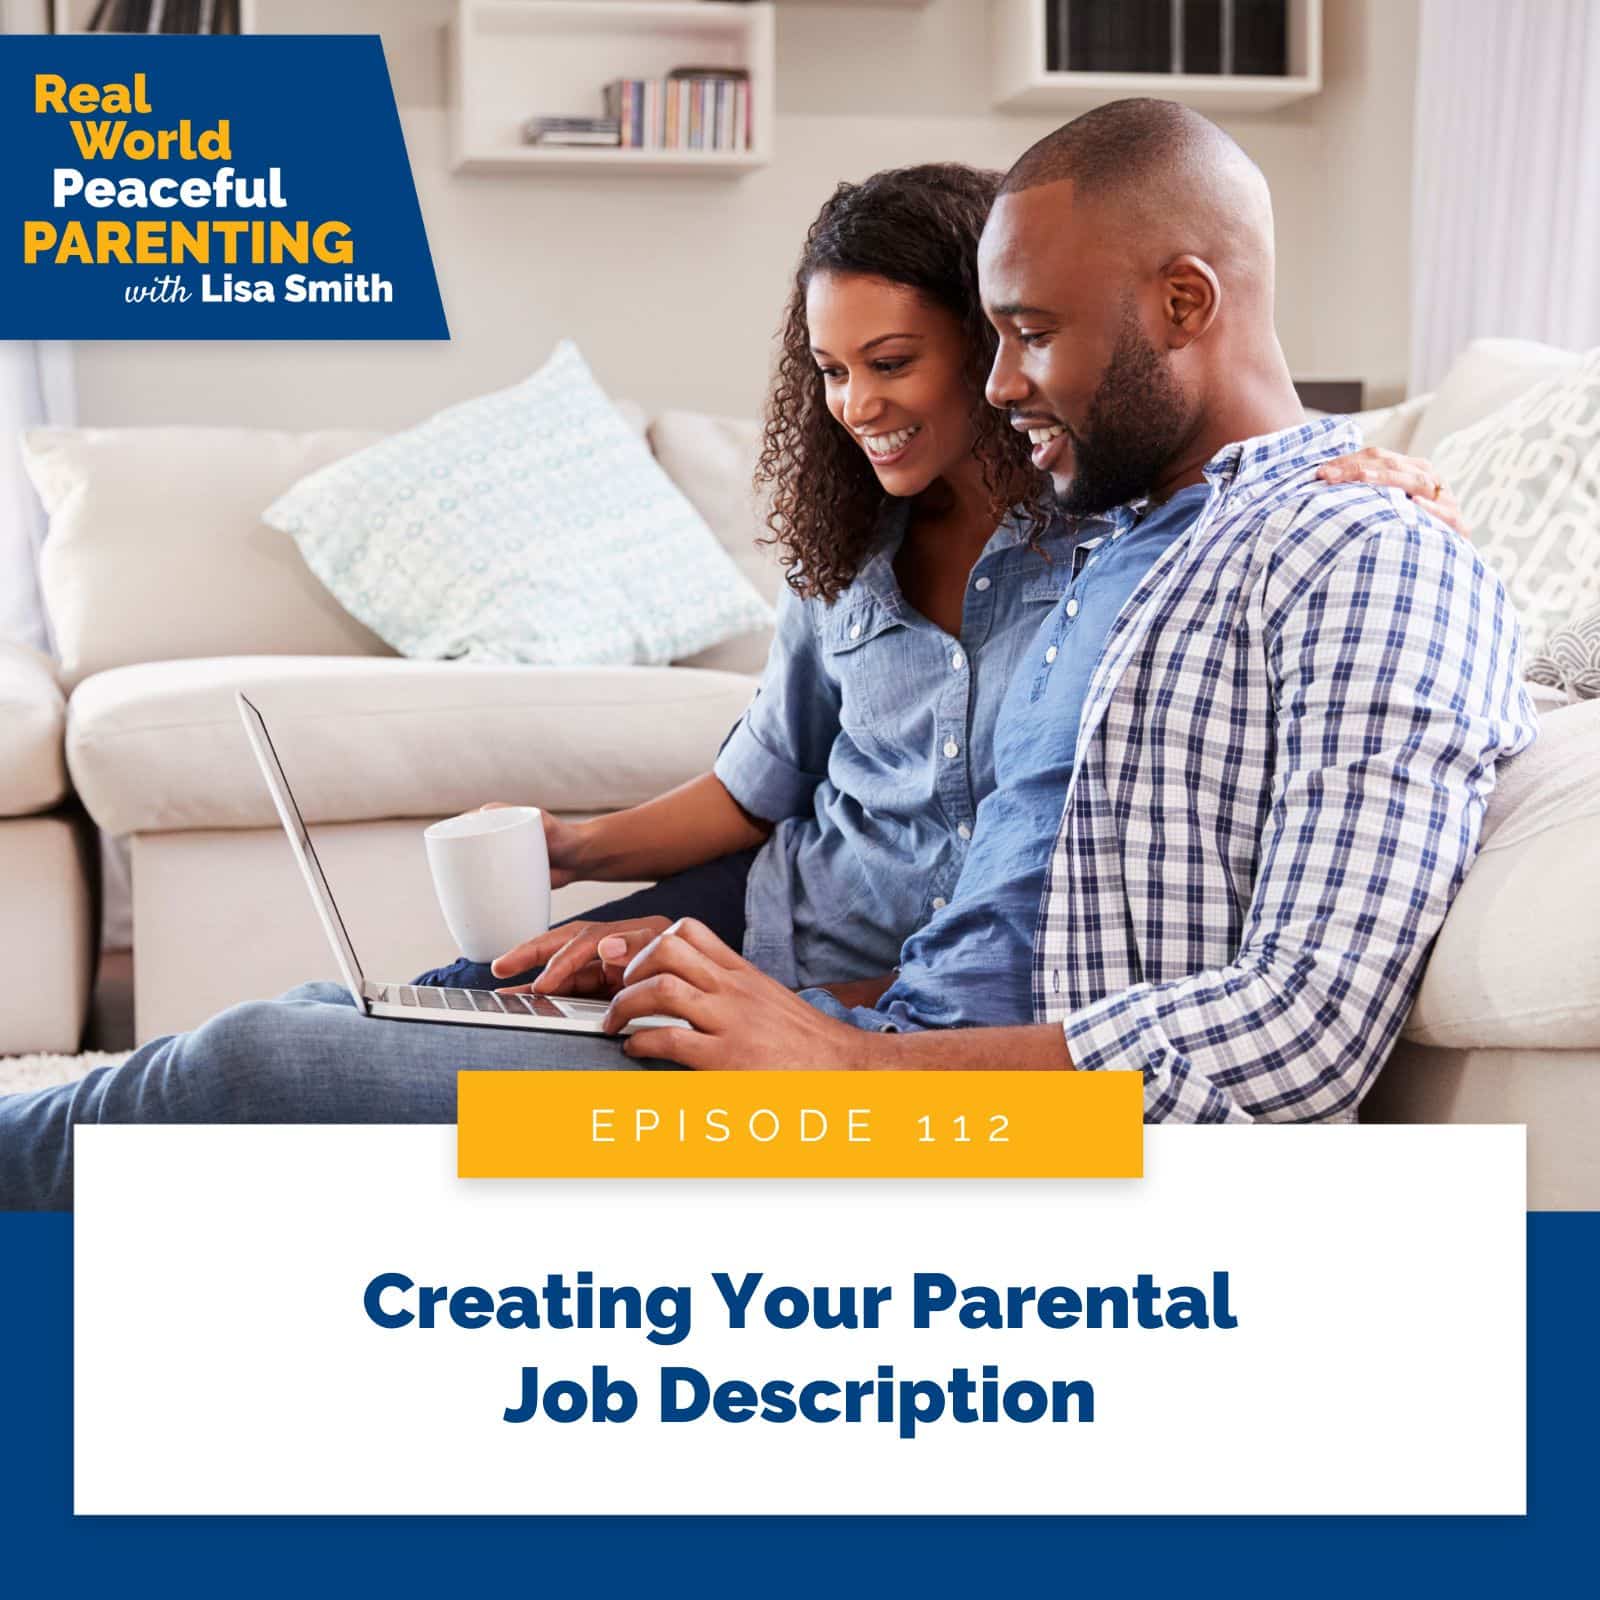 Real World Peaceful Parenting Lisa Smith | Creating Your Parental Job Description